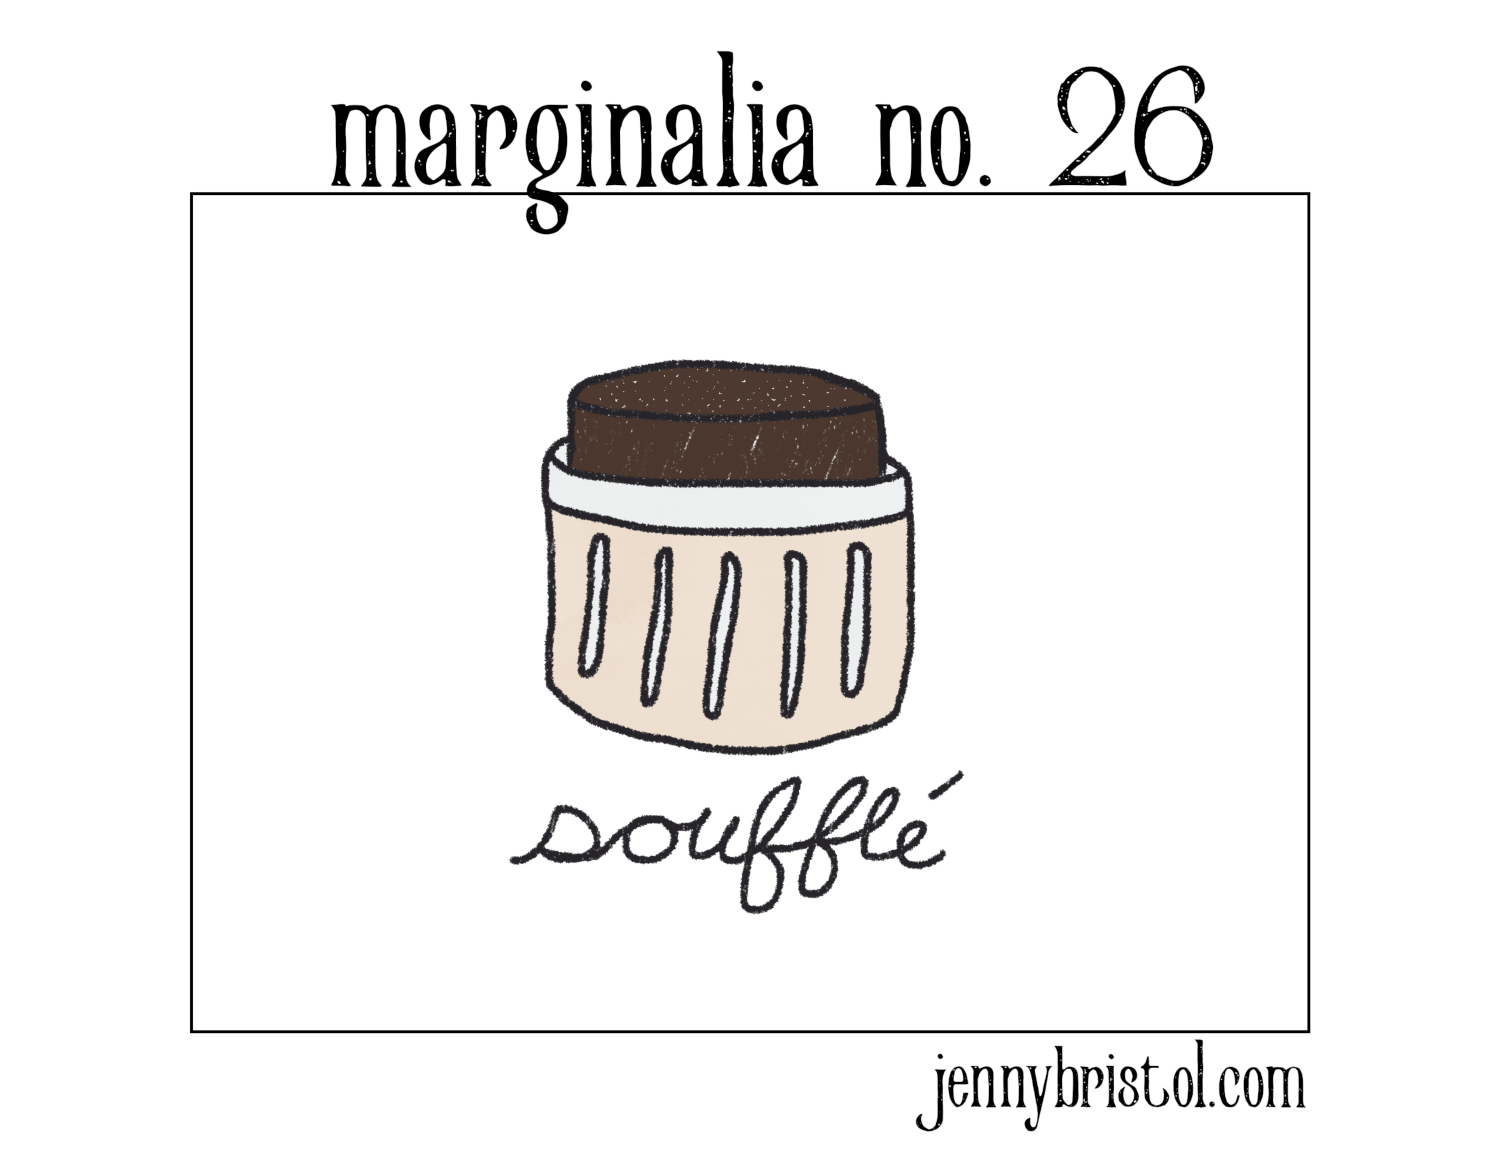 Marginalia no. 26 to post